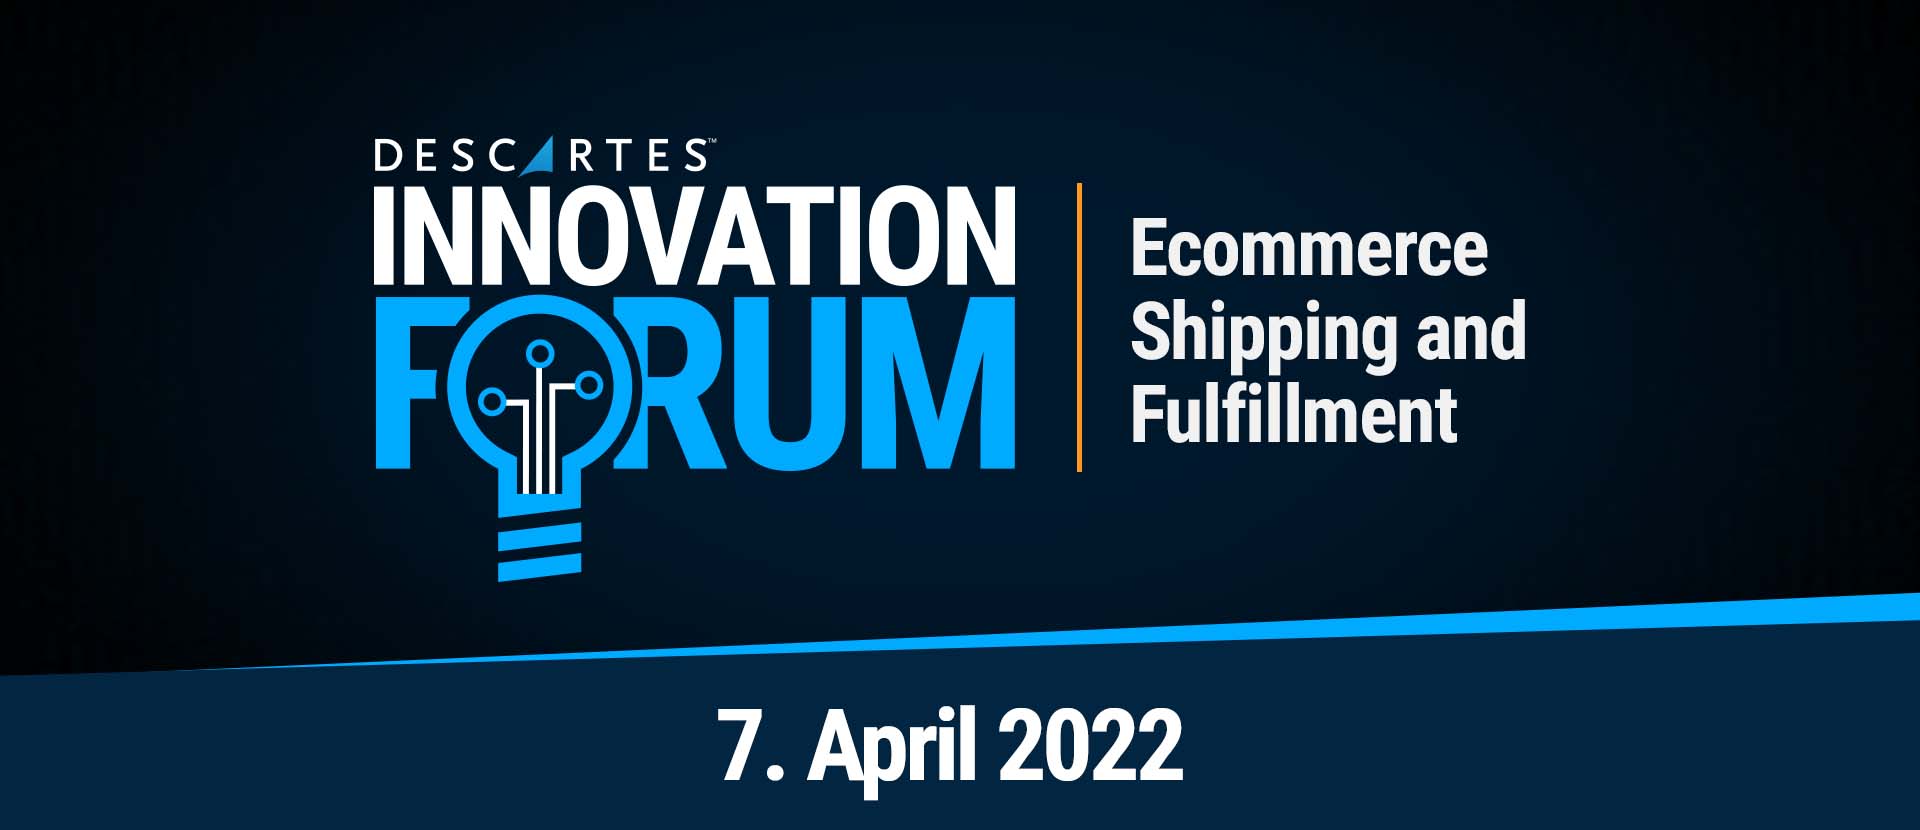 Descartes Innovation Forum Ecommerce 07.04.22.